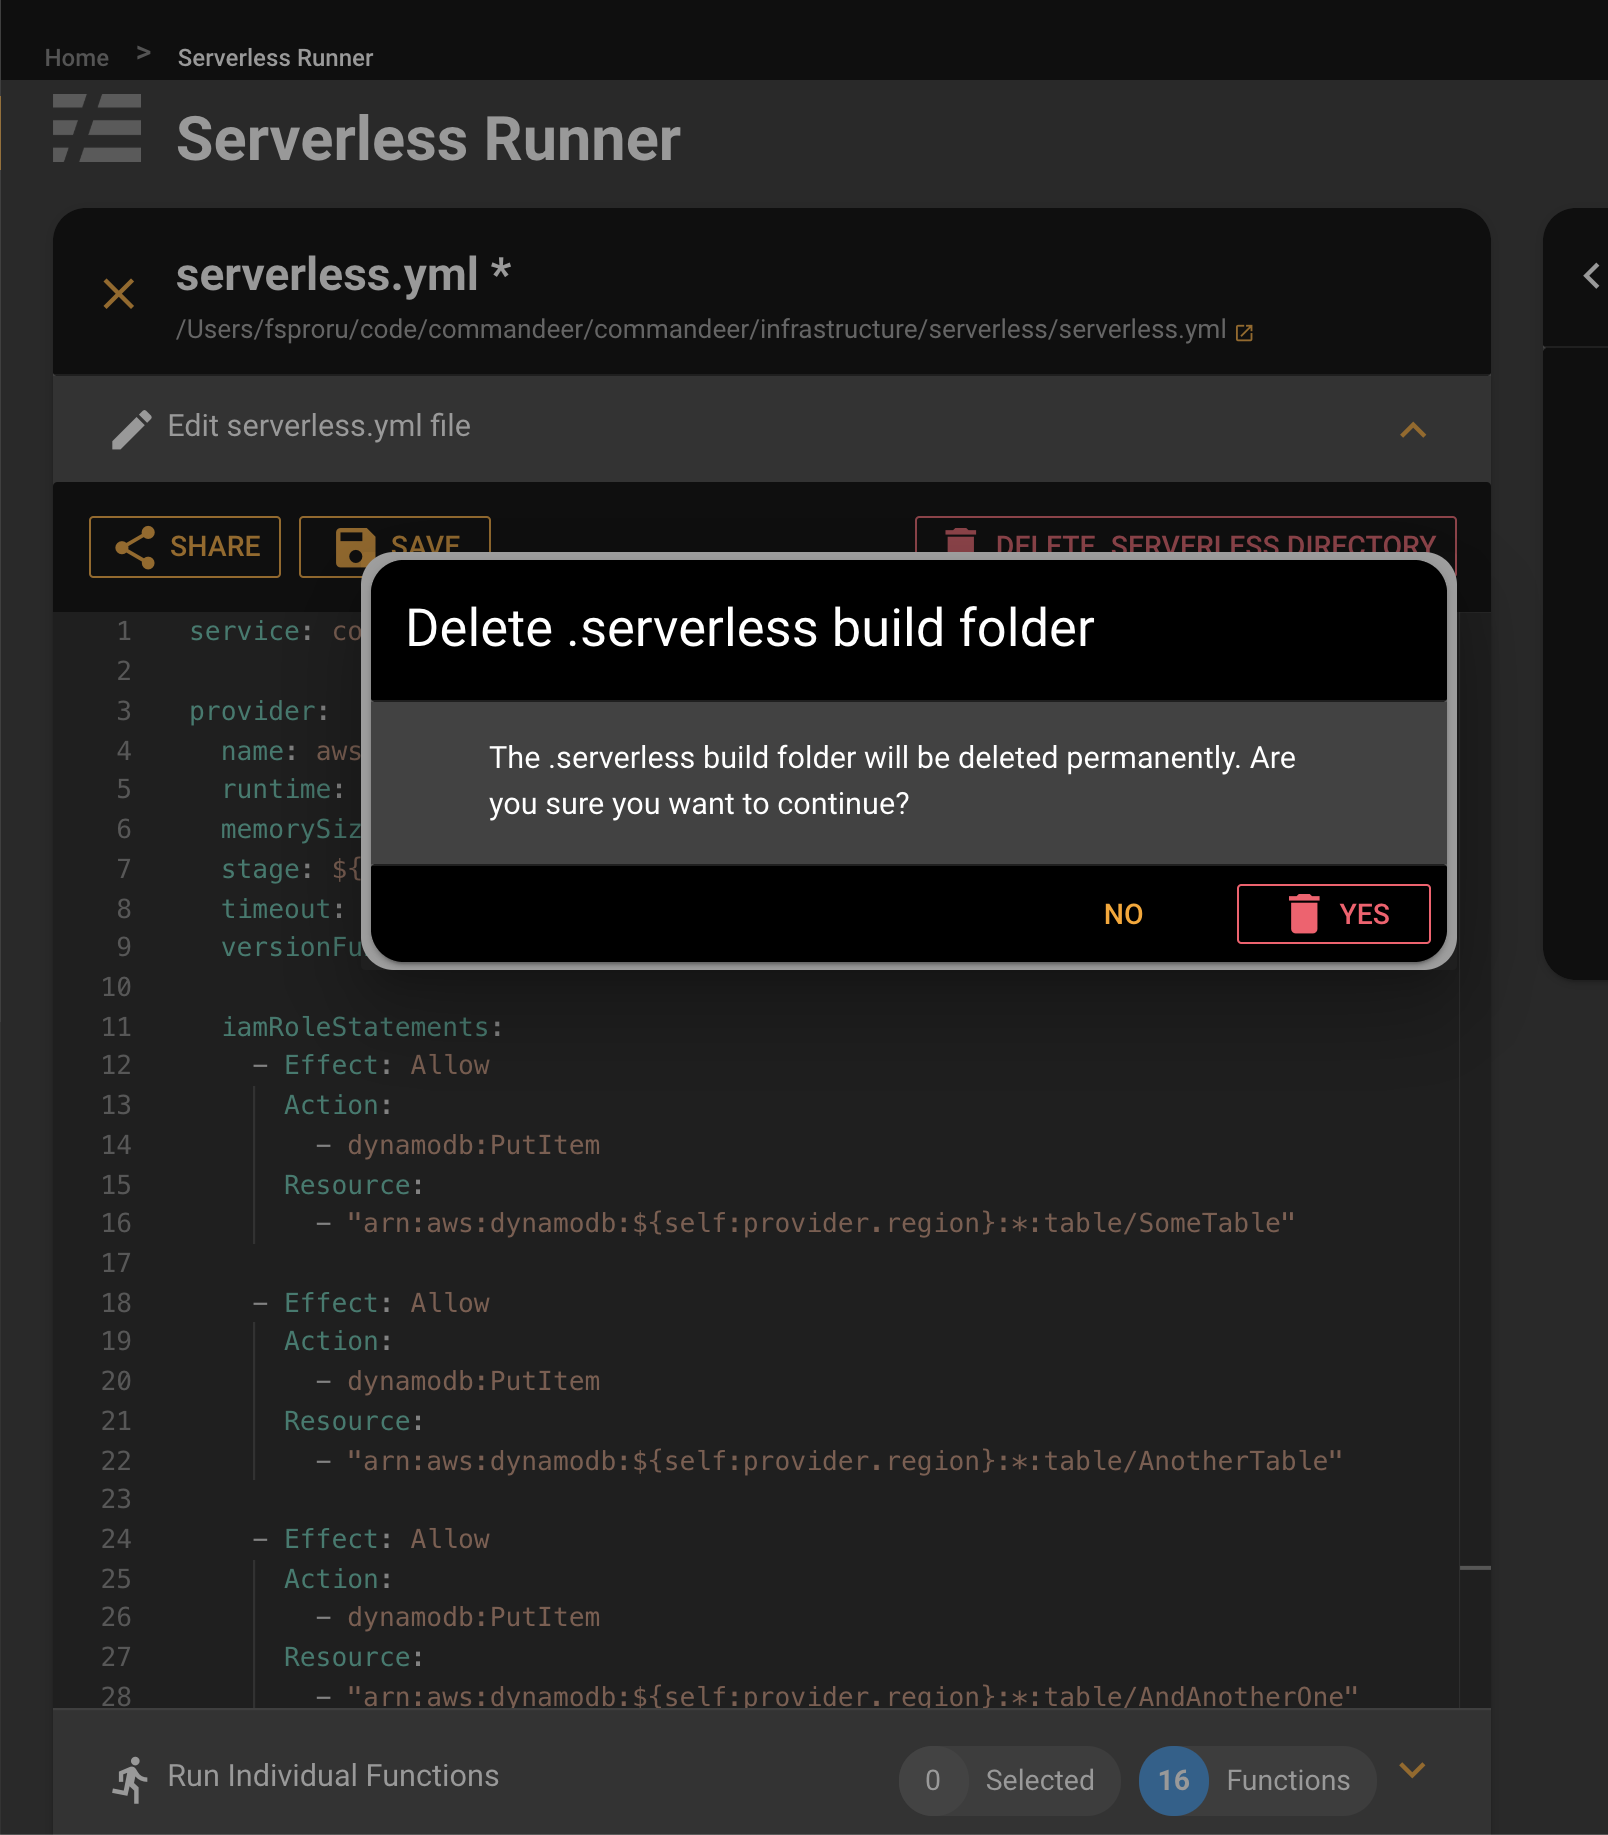 Deleting .serverless directory